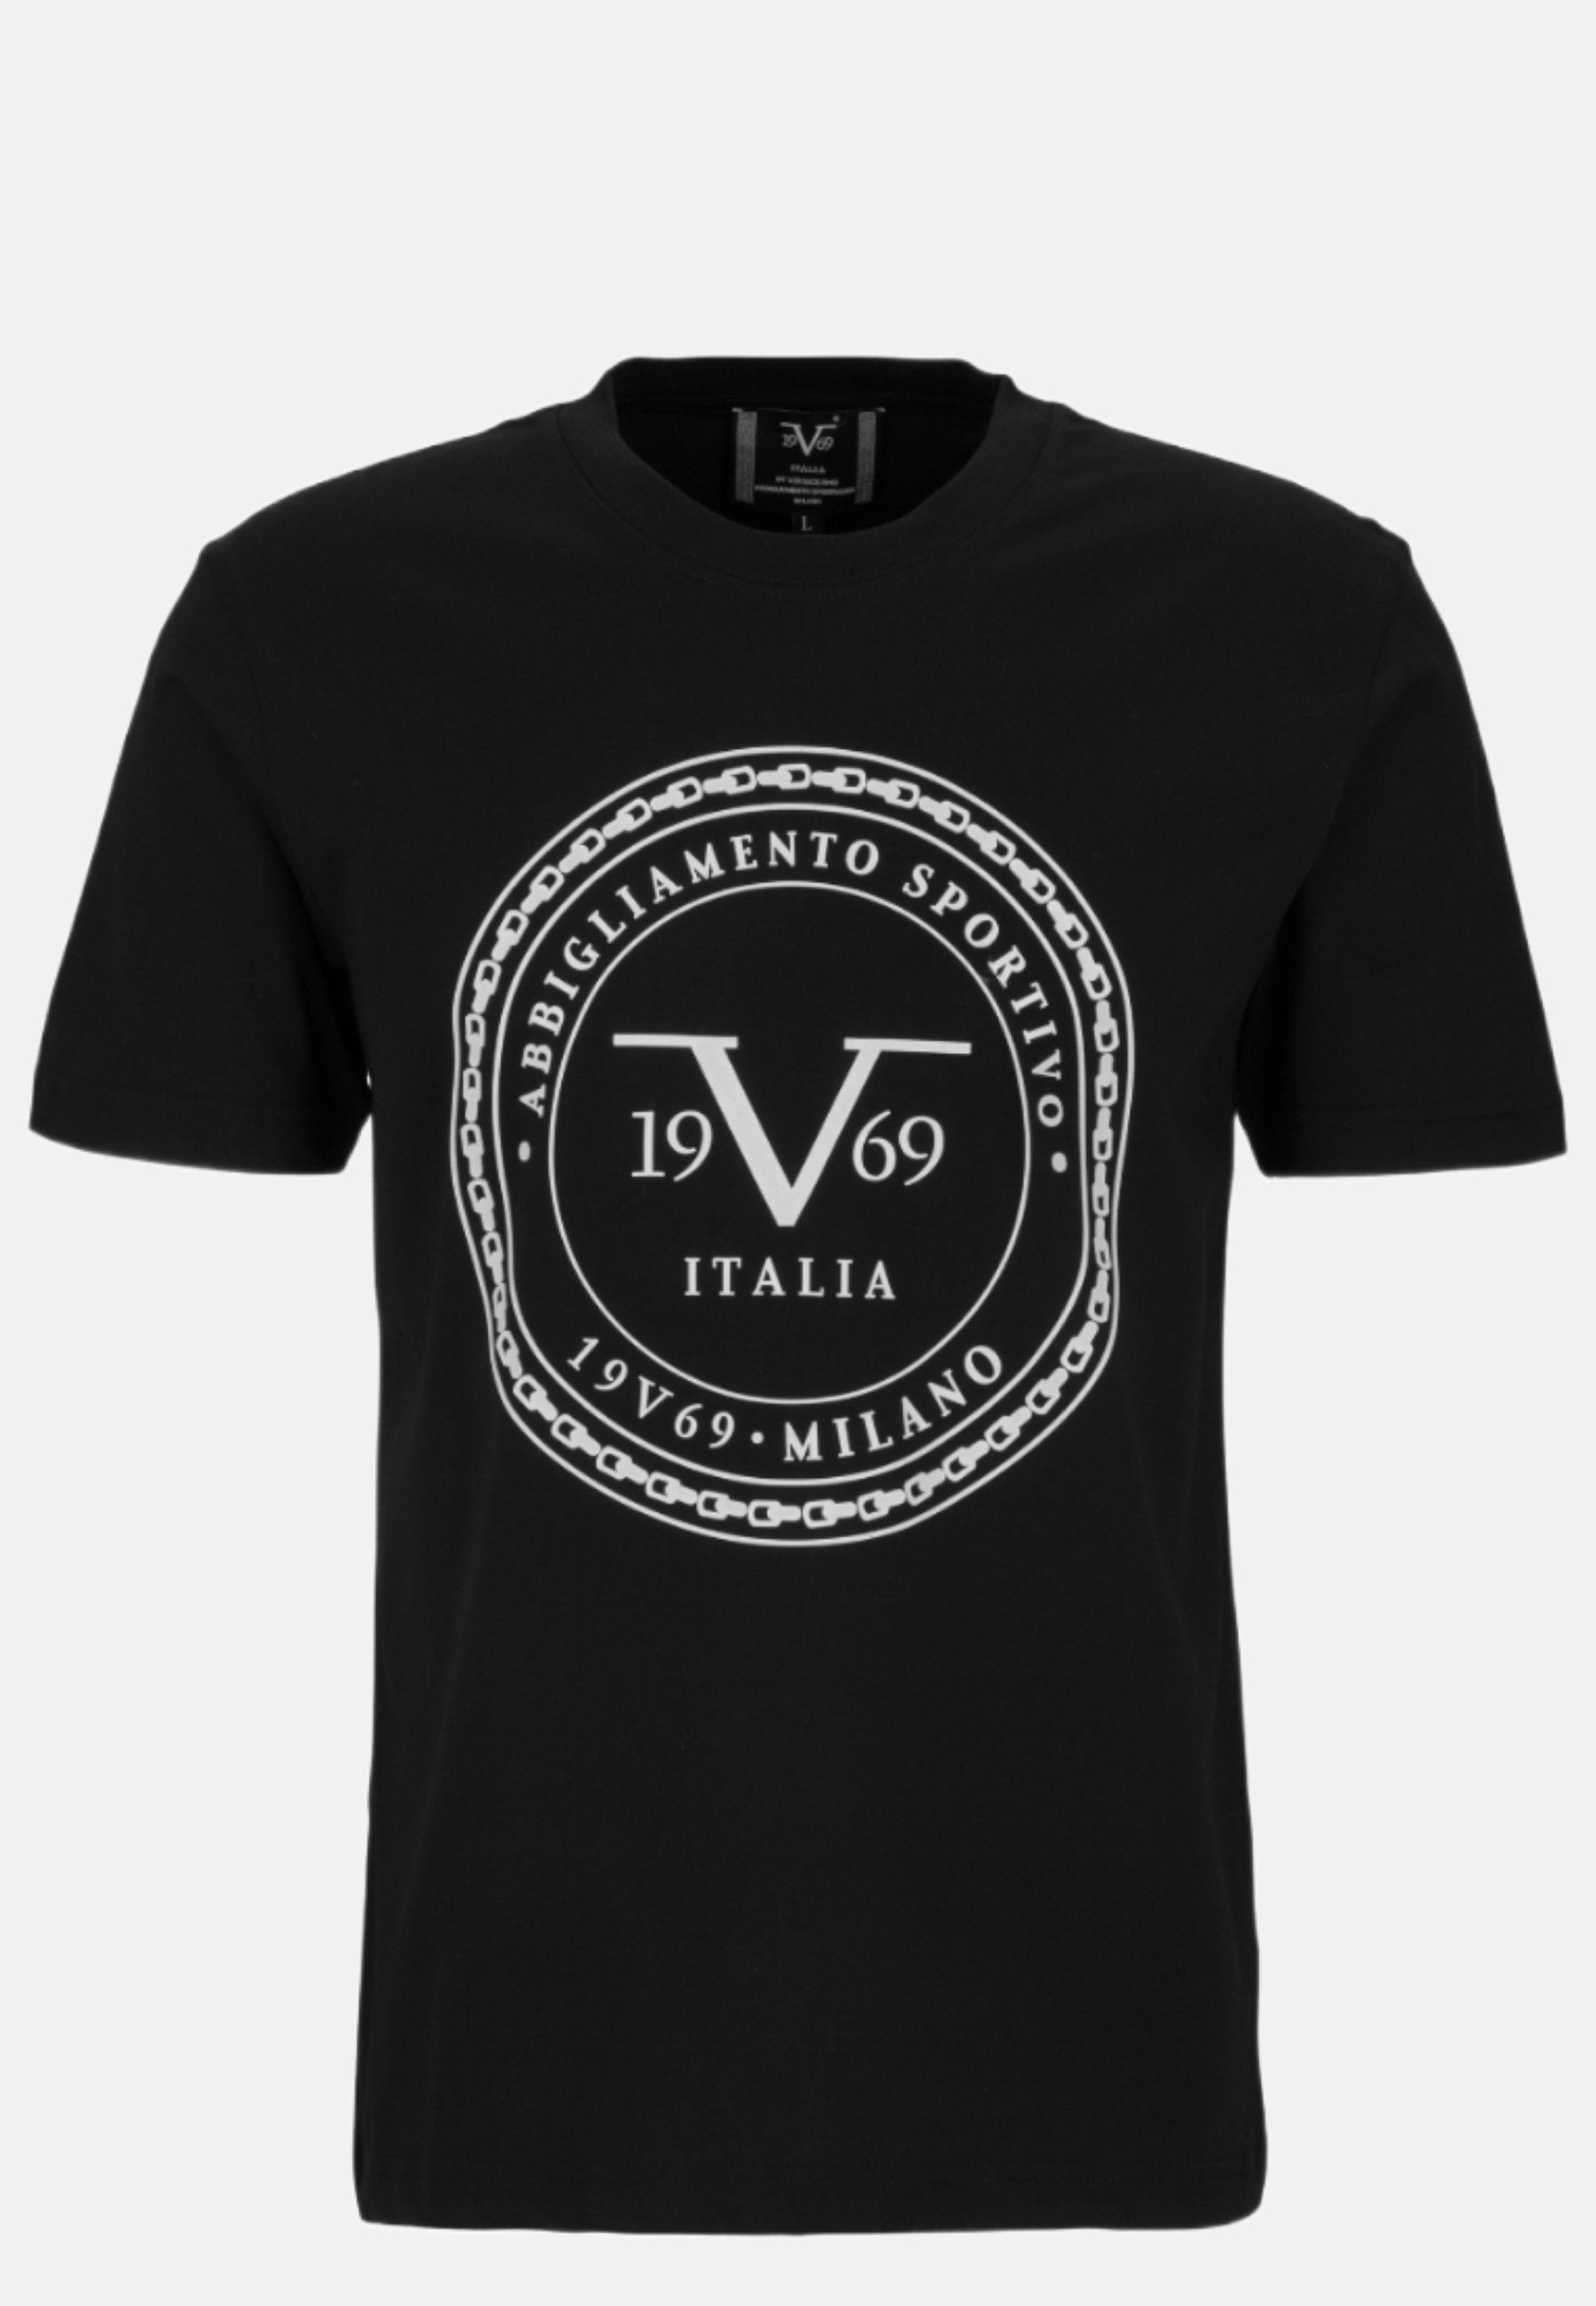 19V69 Versace by T-Shirt Italia Felix T-Shirt BLACK